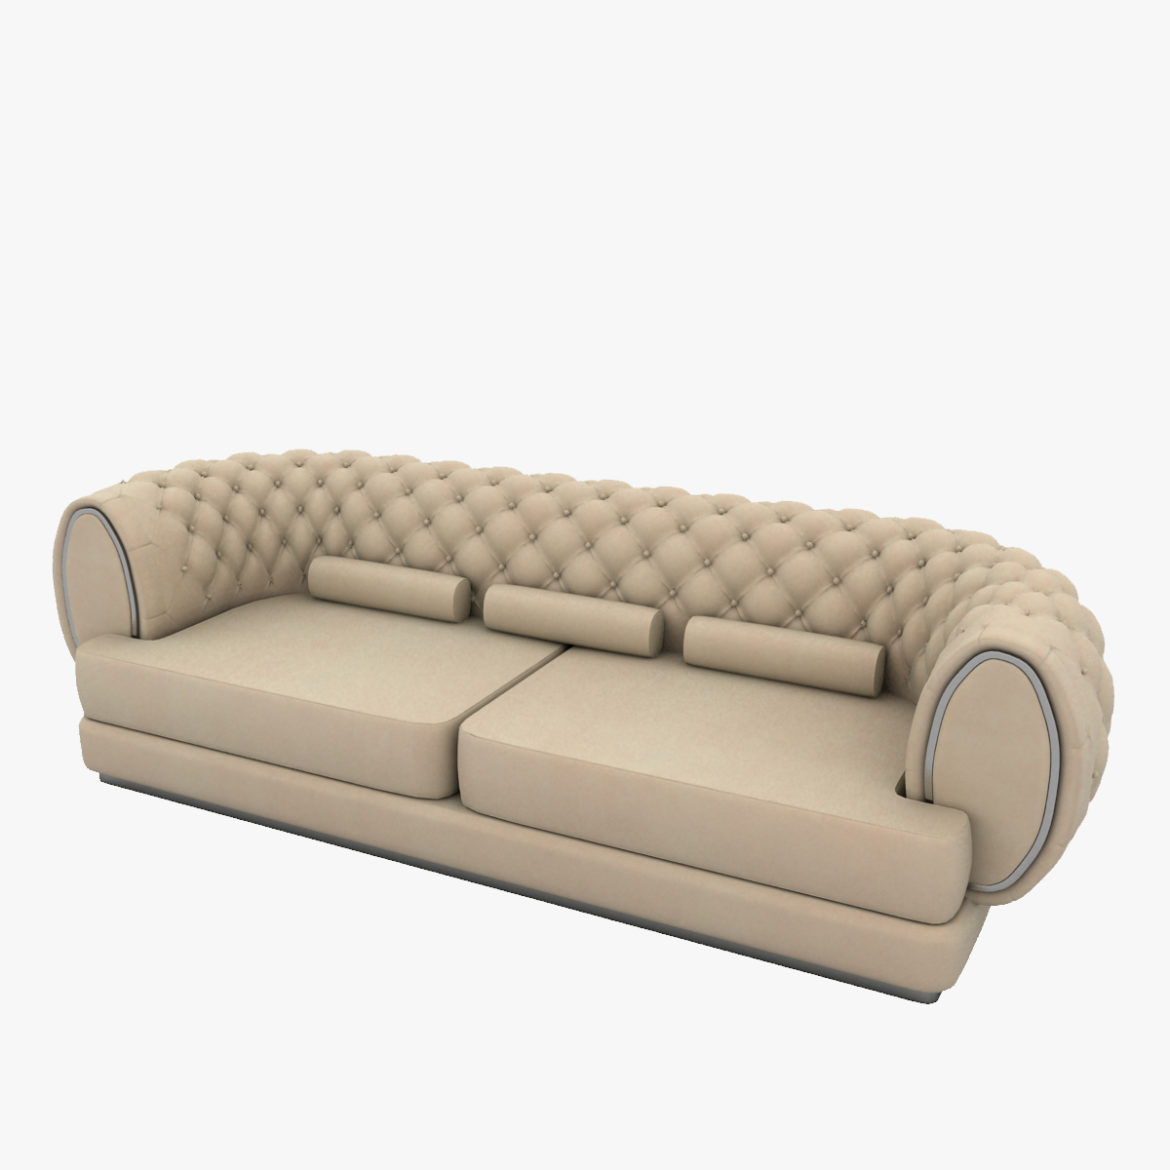 luxury sofa 3d model 3ds max fbx obj 293911